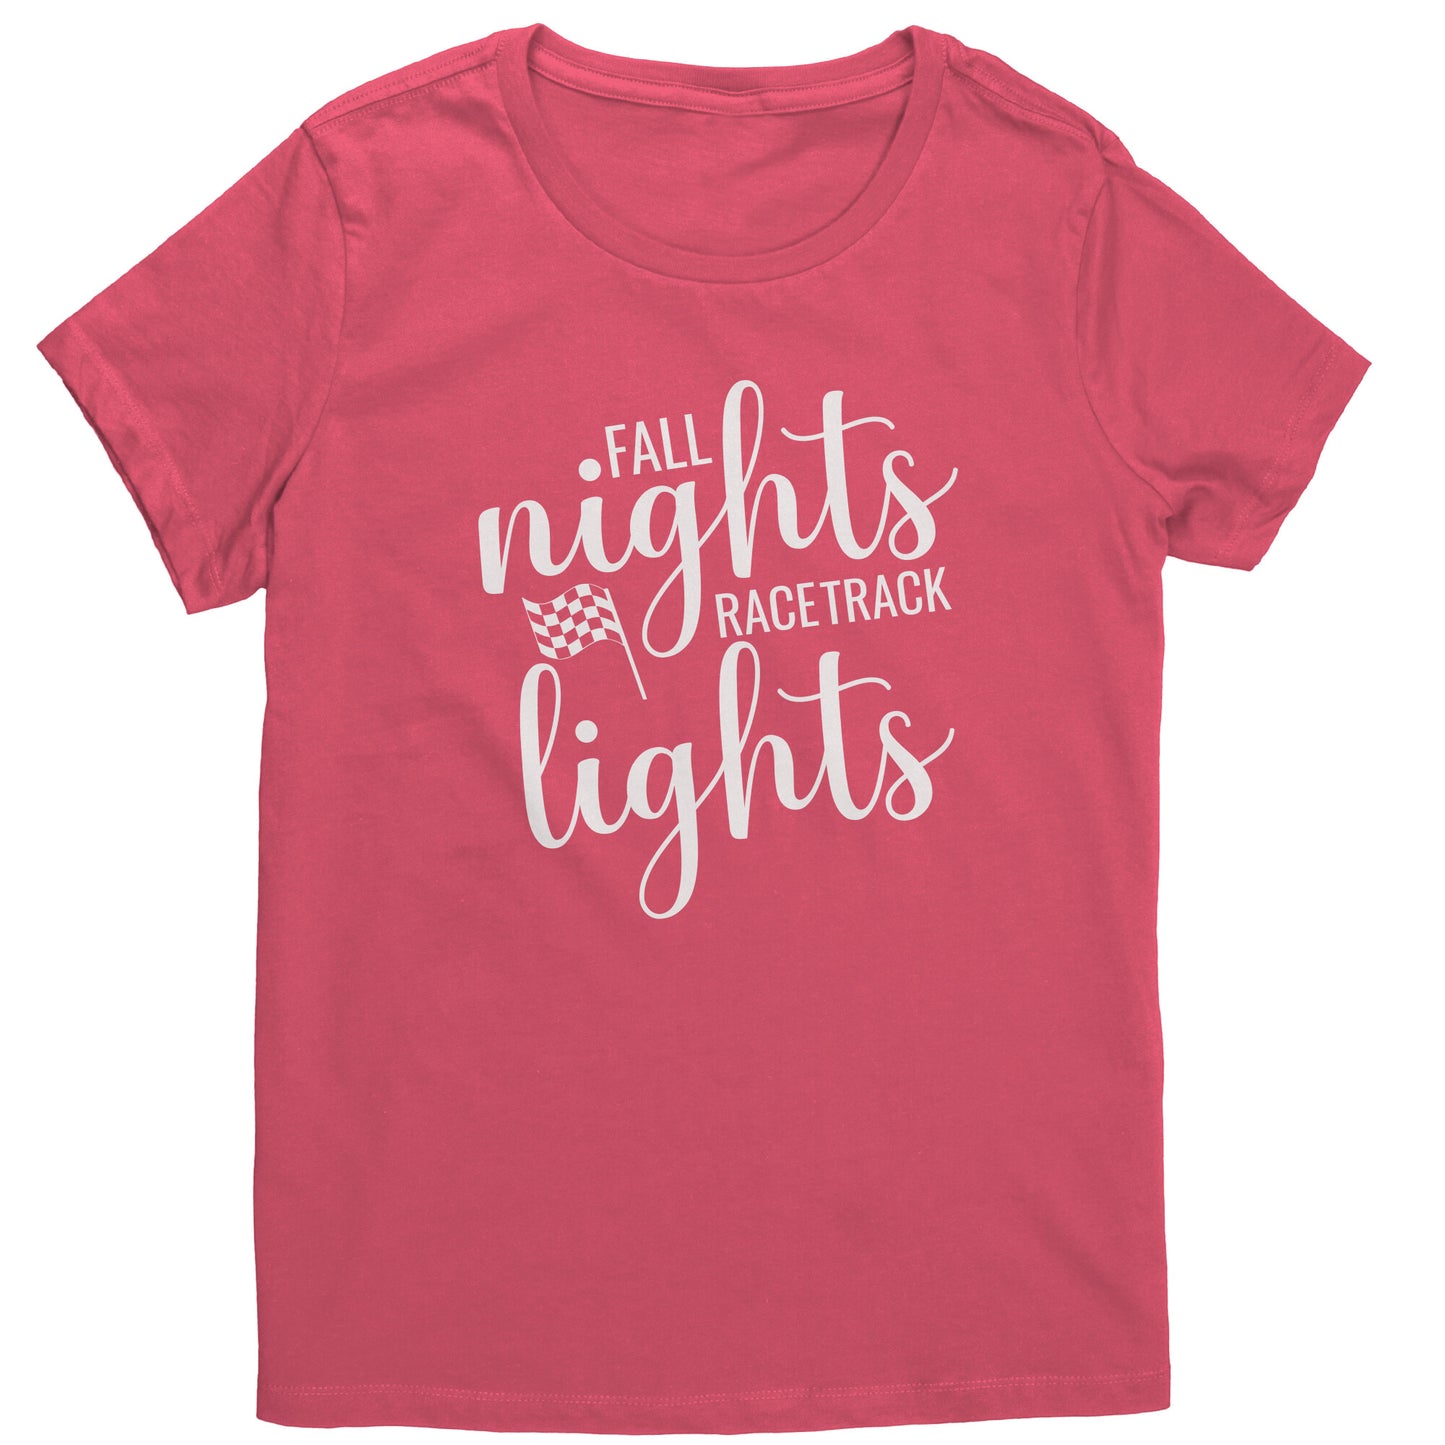 Fall Nights Racetrack Lights T-Shirt